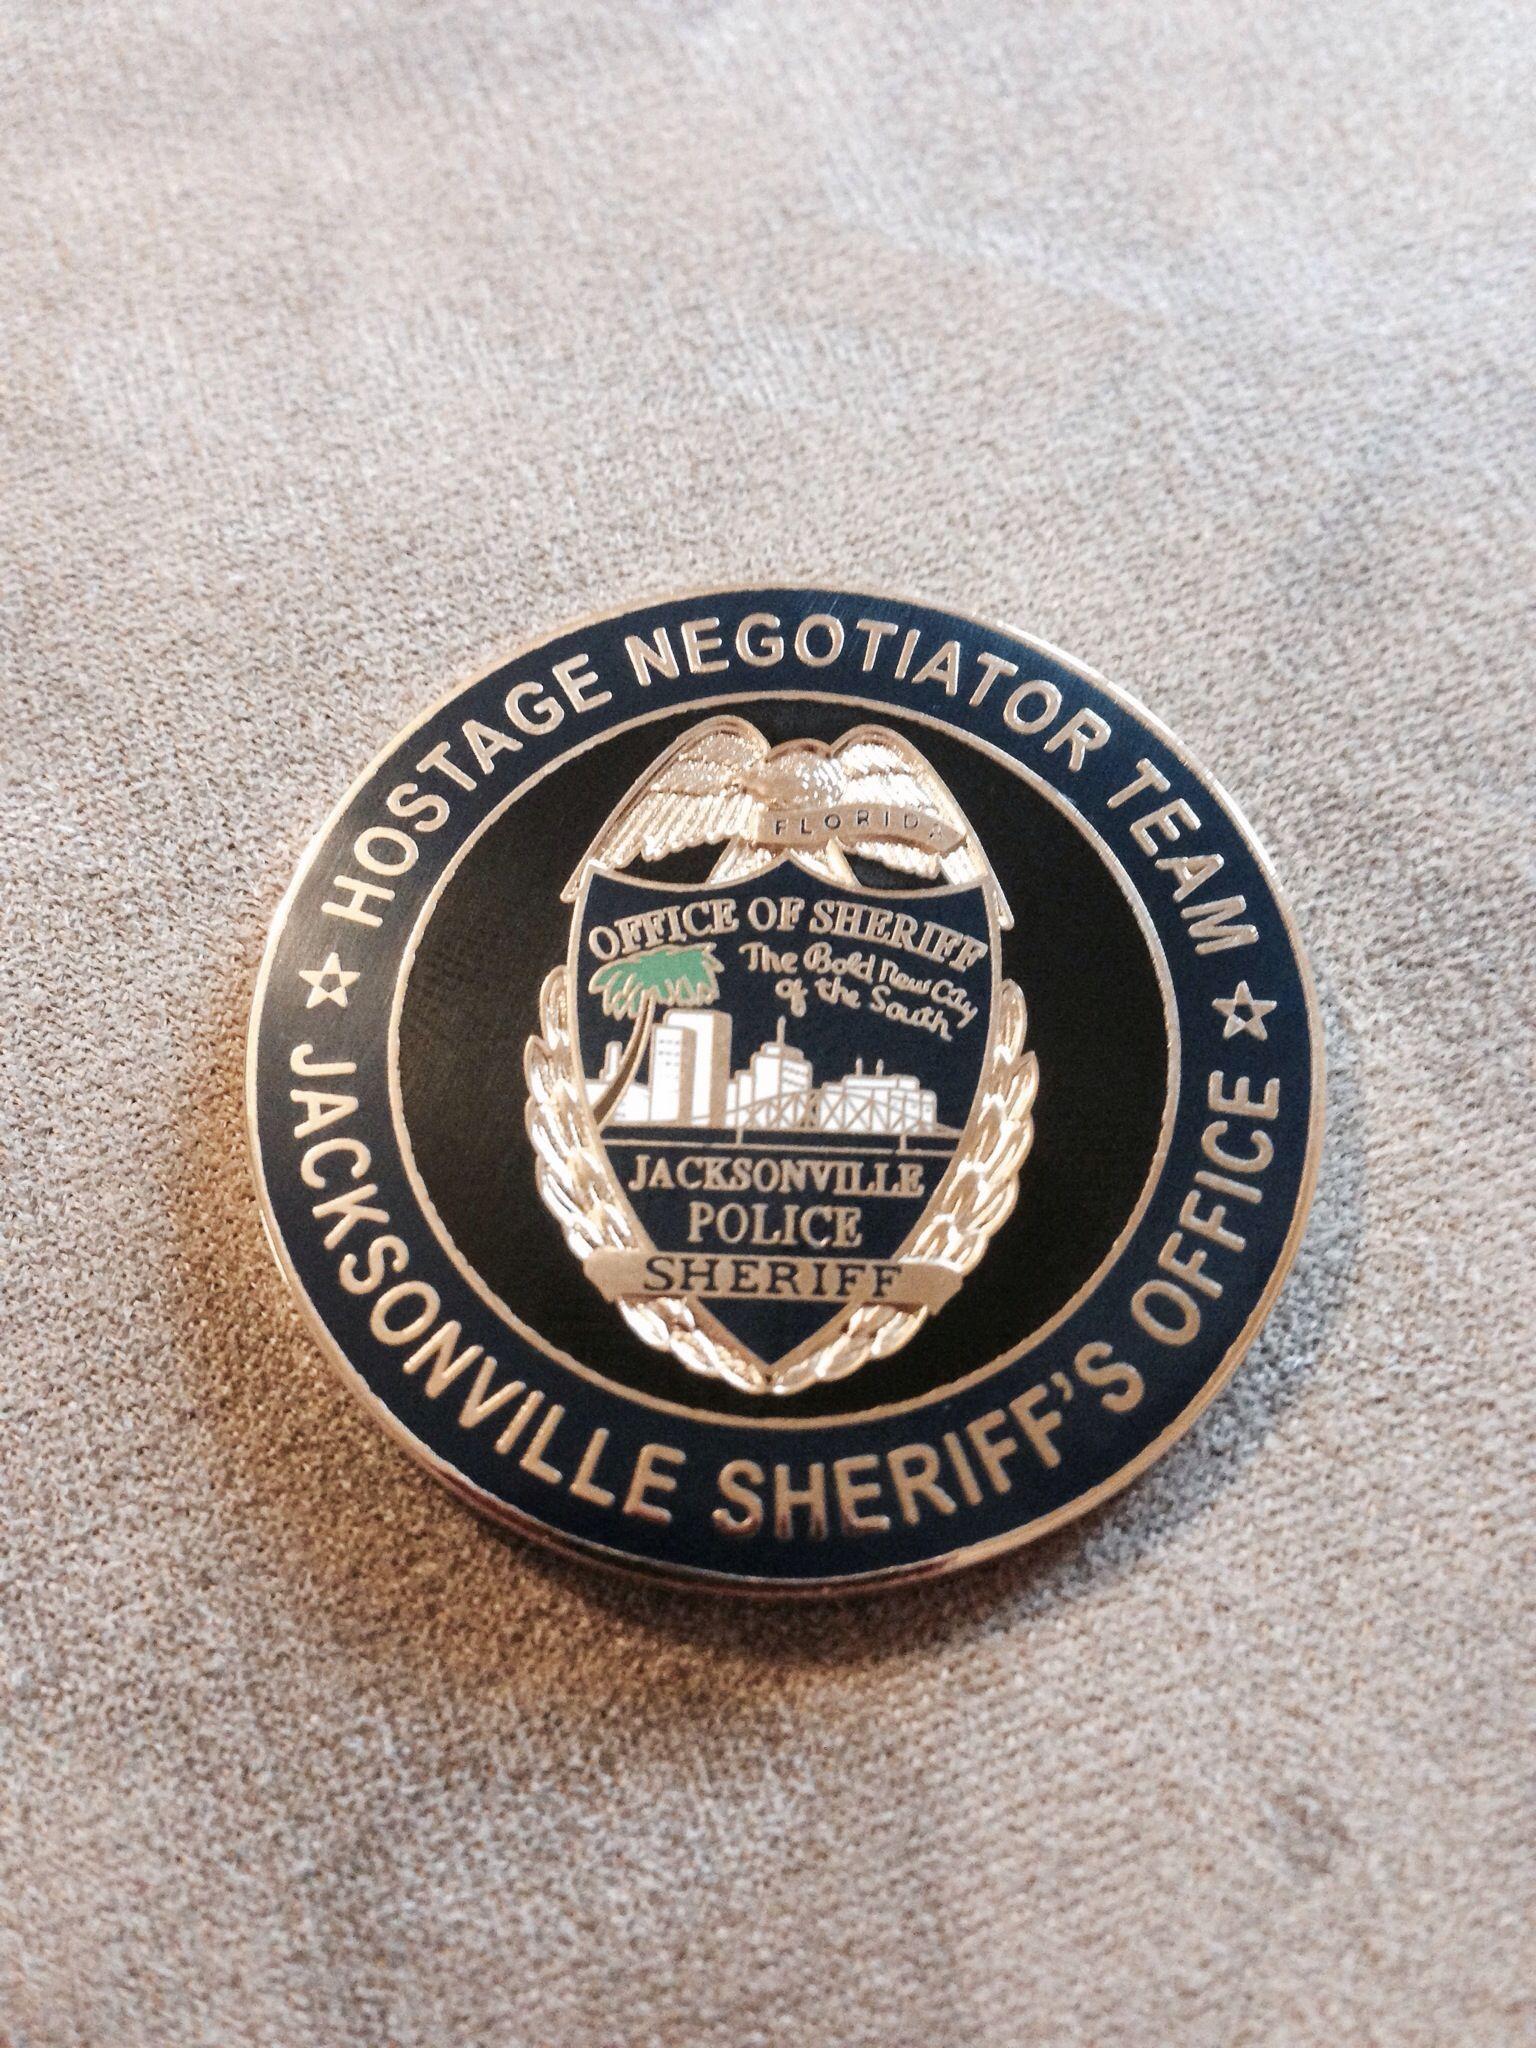 Negotiator Logo - Jacksonville Sheriff's Office Hostage Negotiator Team. HNT. Police